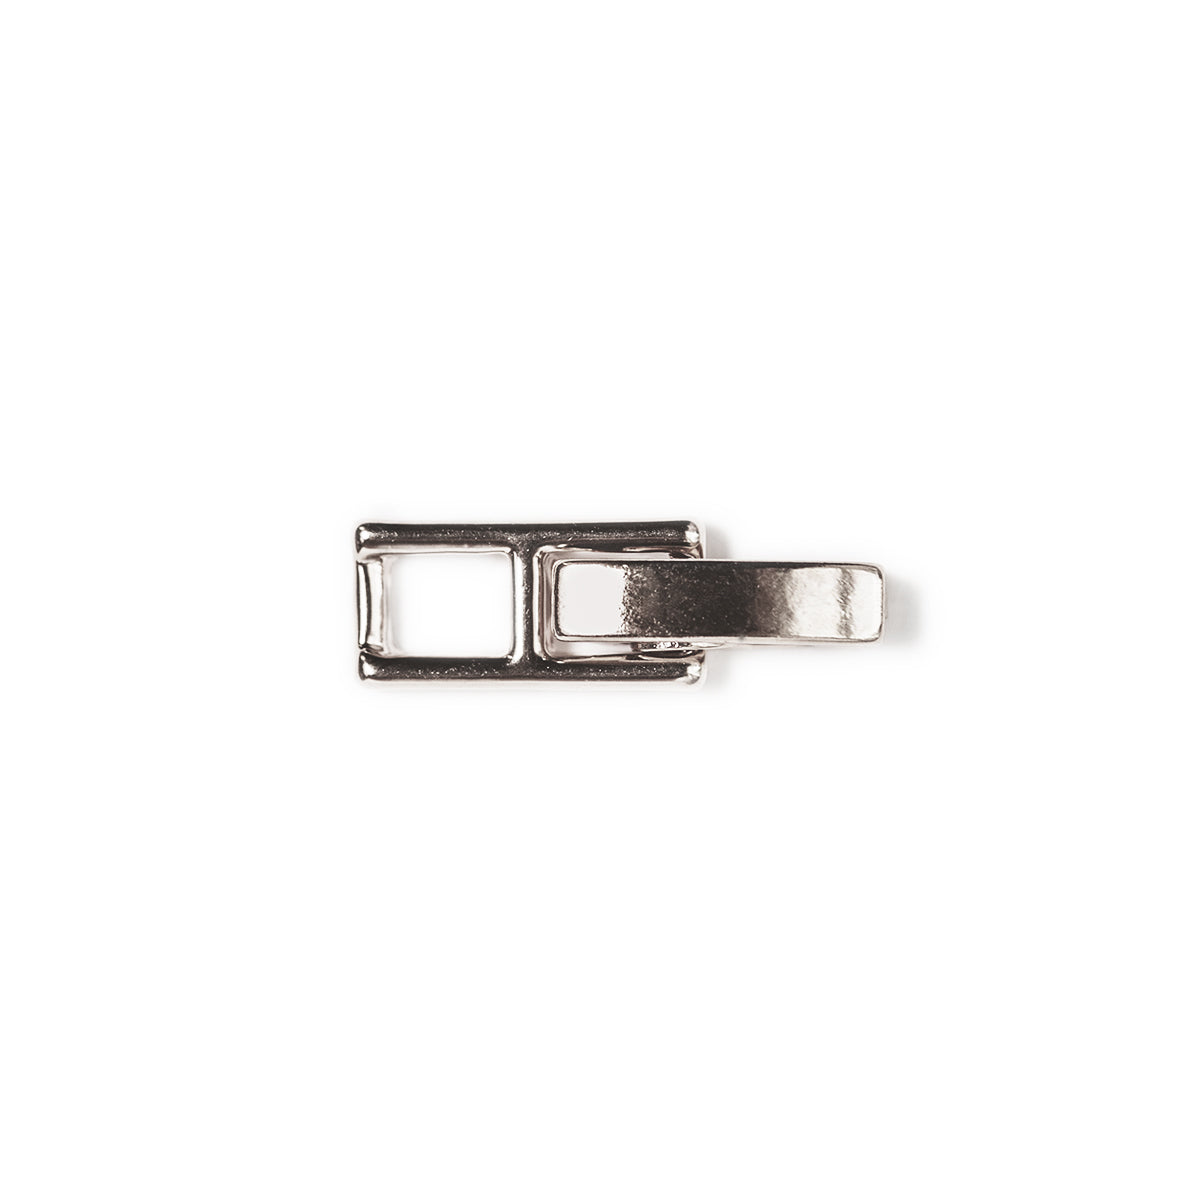 Bracelet Extender Fold-over Clasp